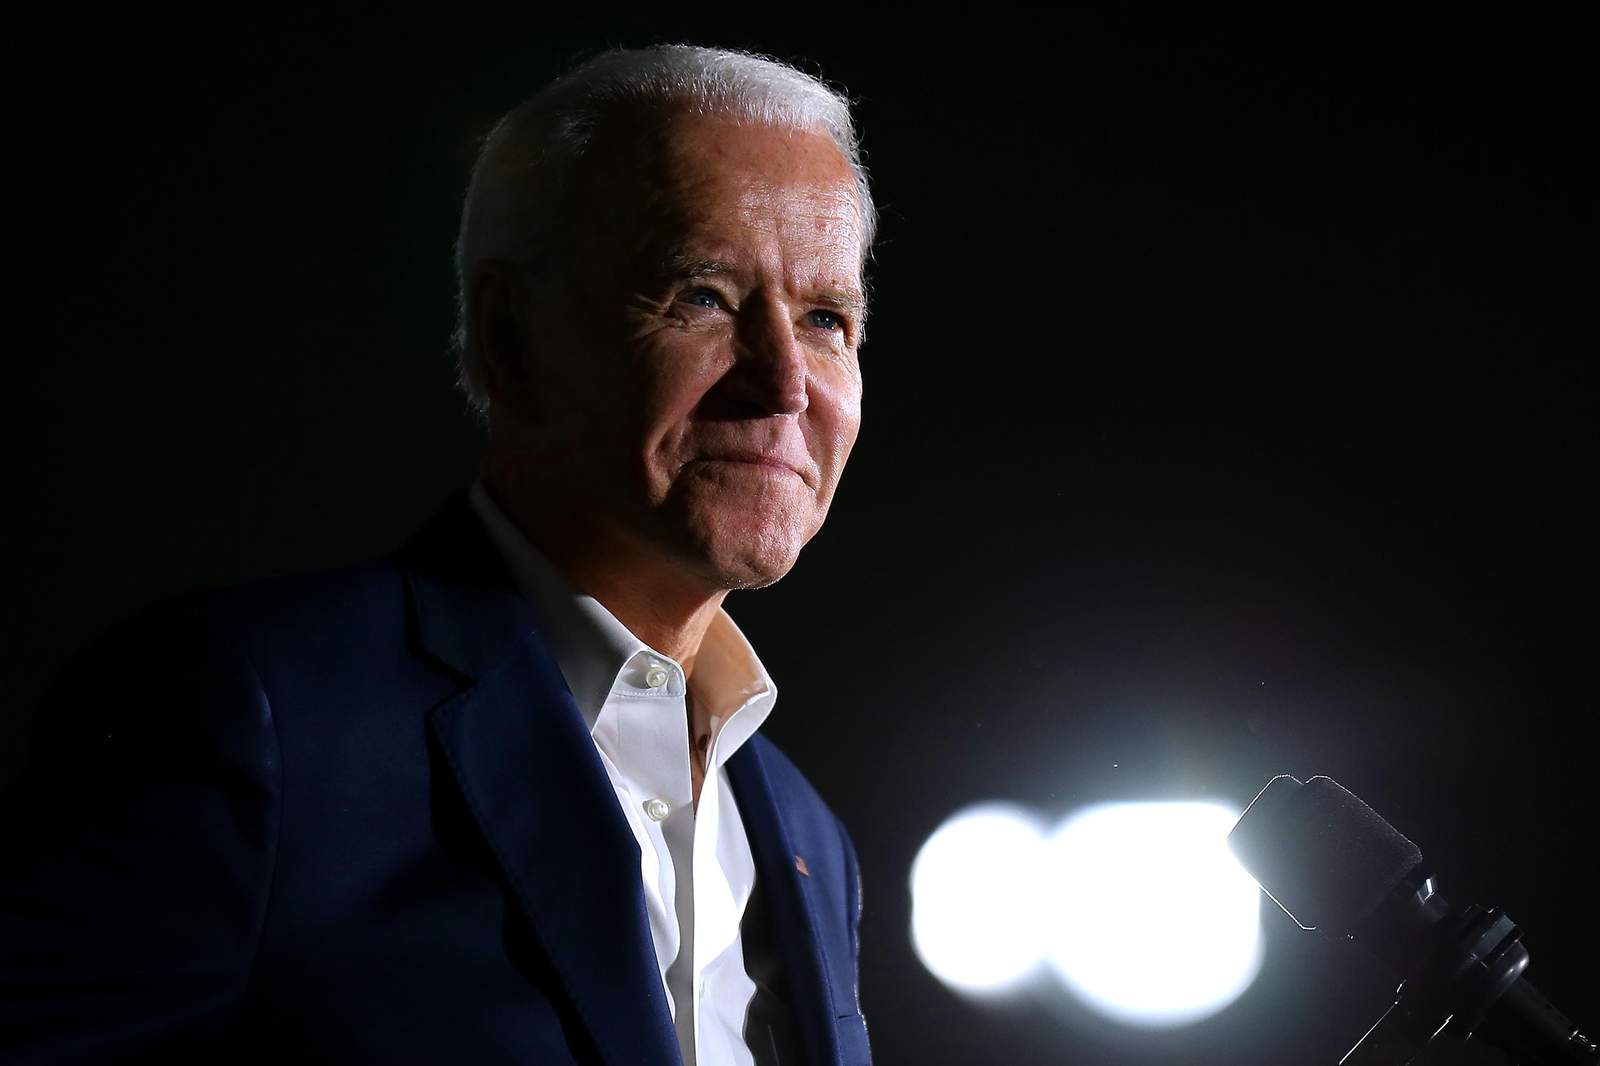 WATCH LIVE: Democratic presidential candidate Joe Biden to speak in Philadelphia